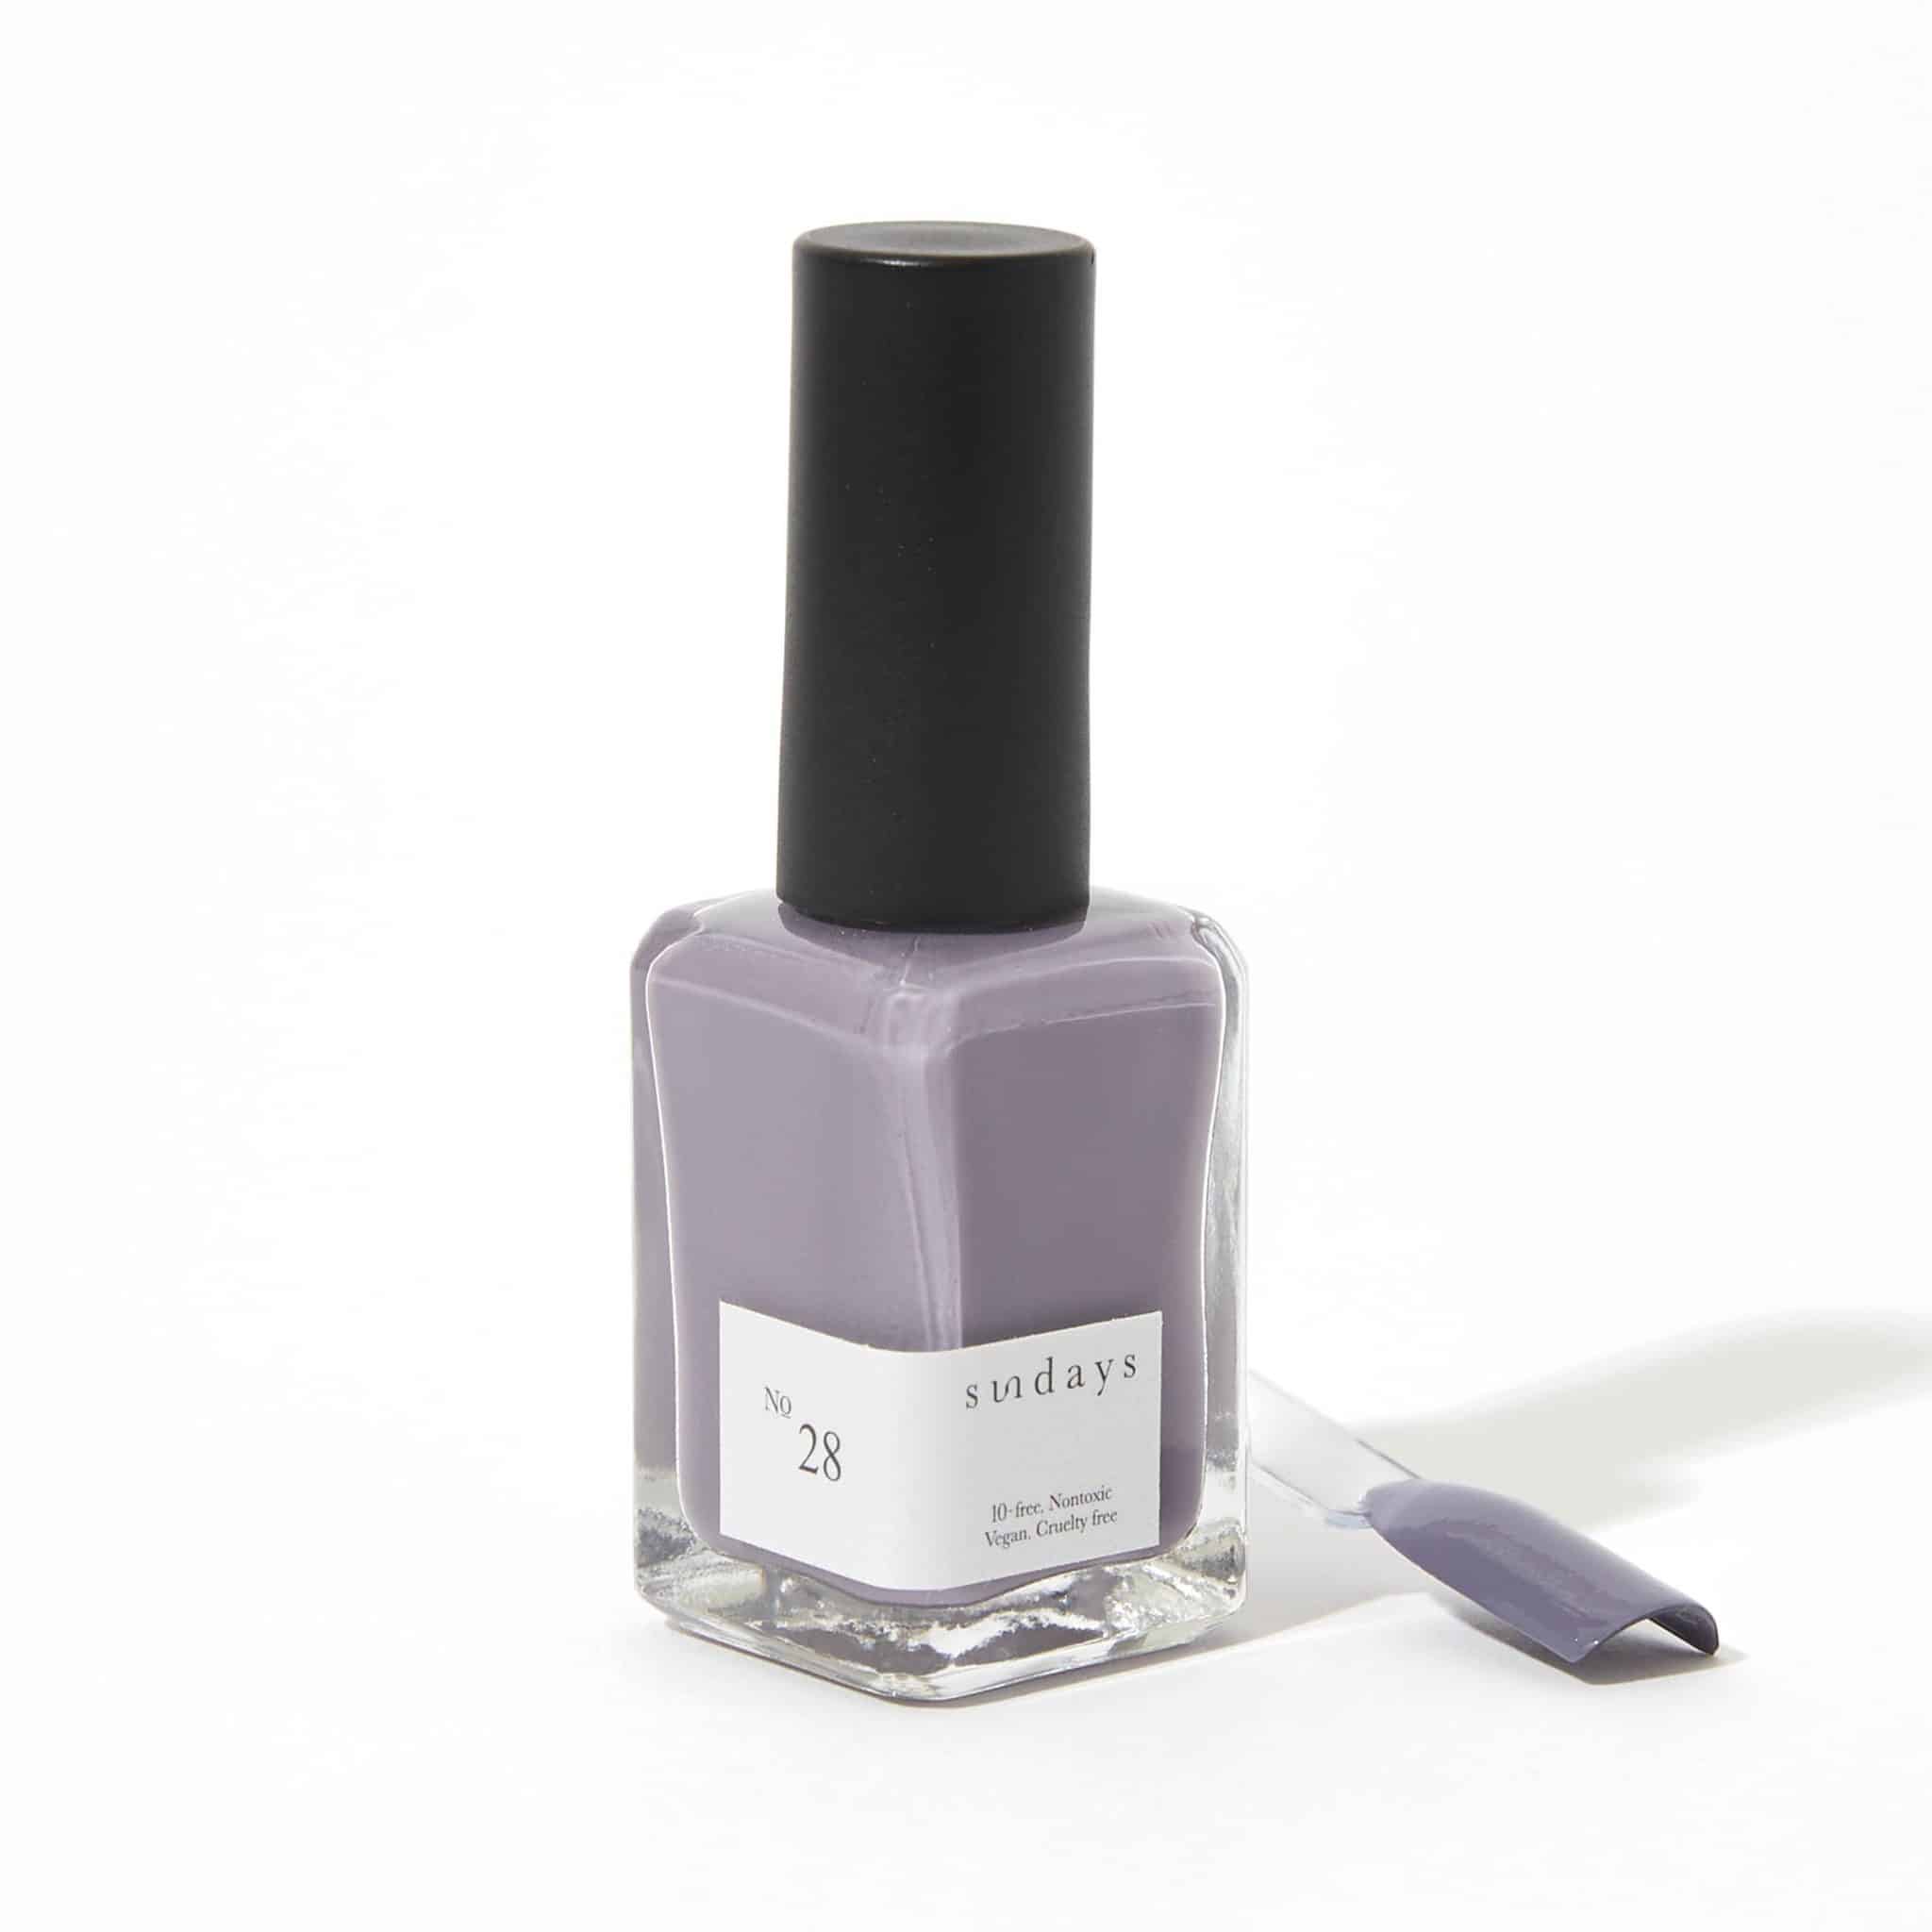 Non-toxic nail polish in lavender grey